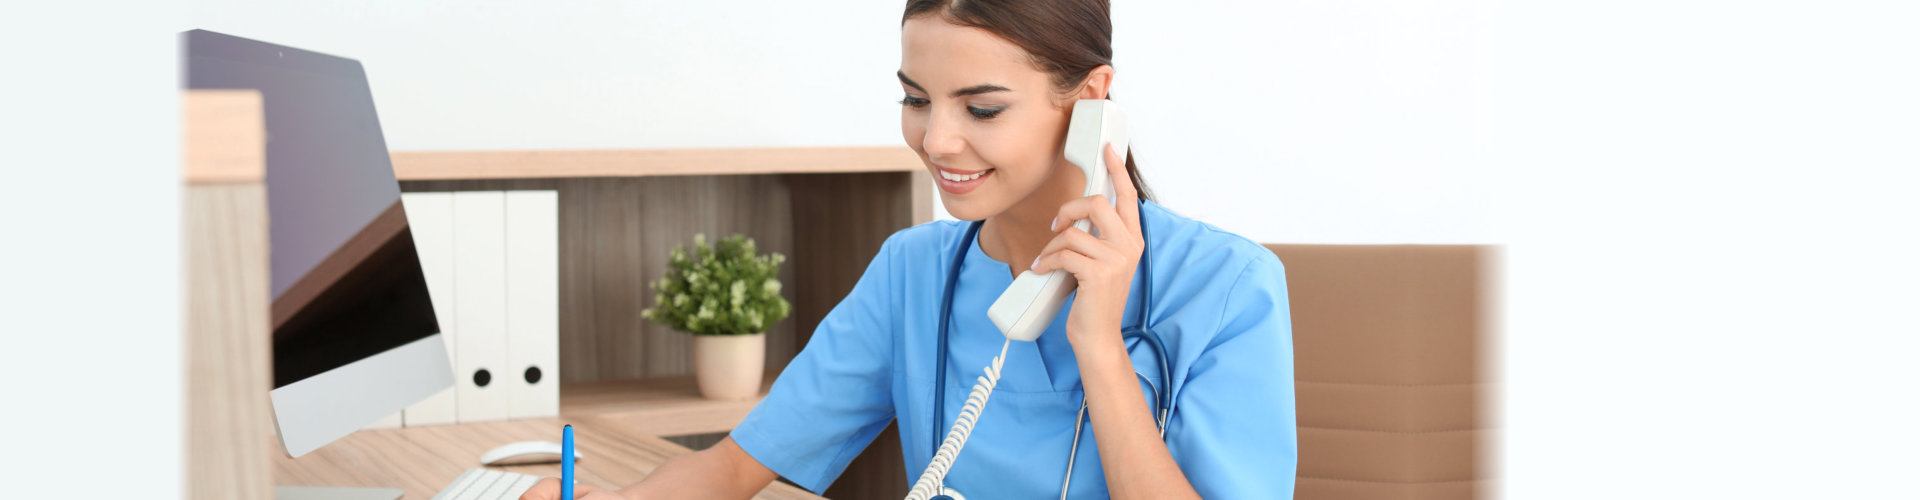 A female nurse picked up a telephone call